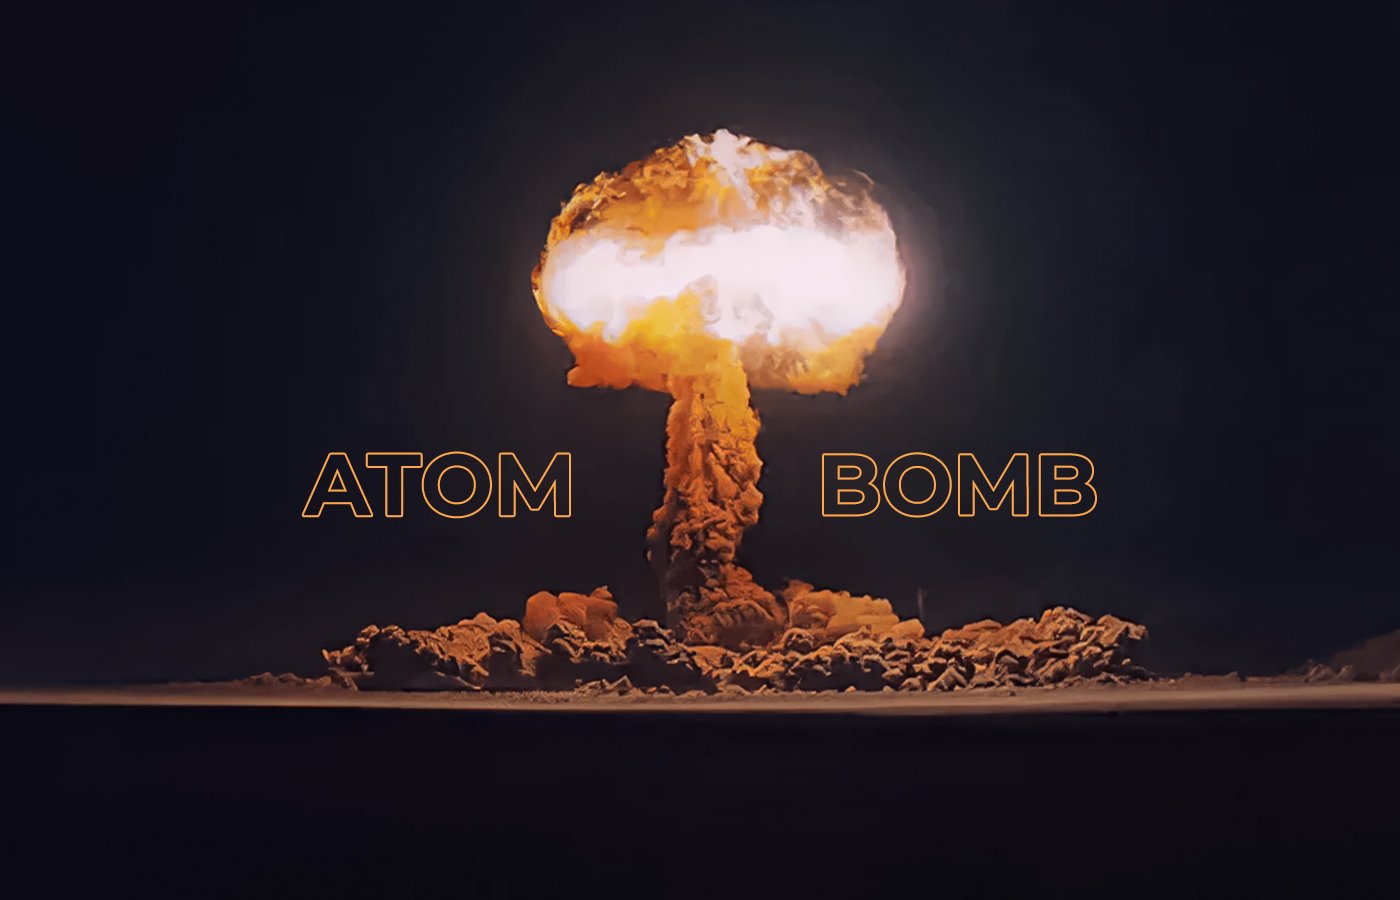 ATOM BOMB COVER